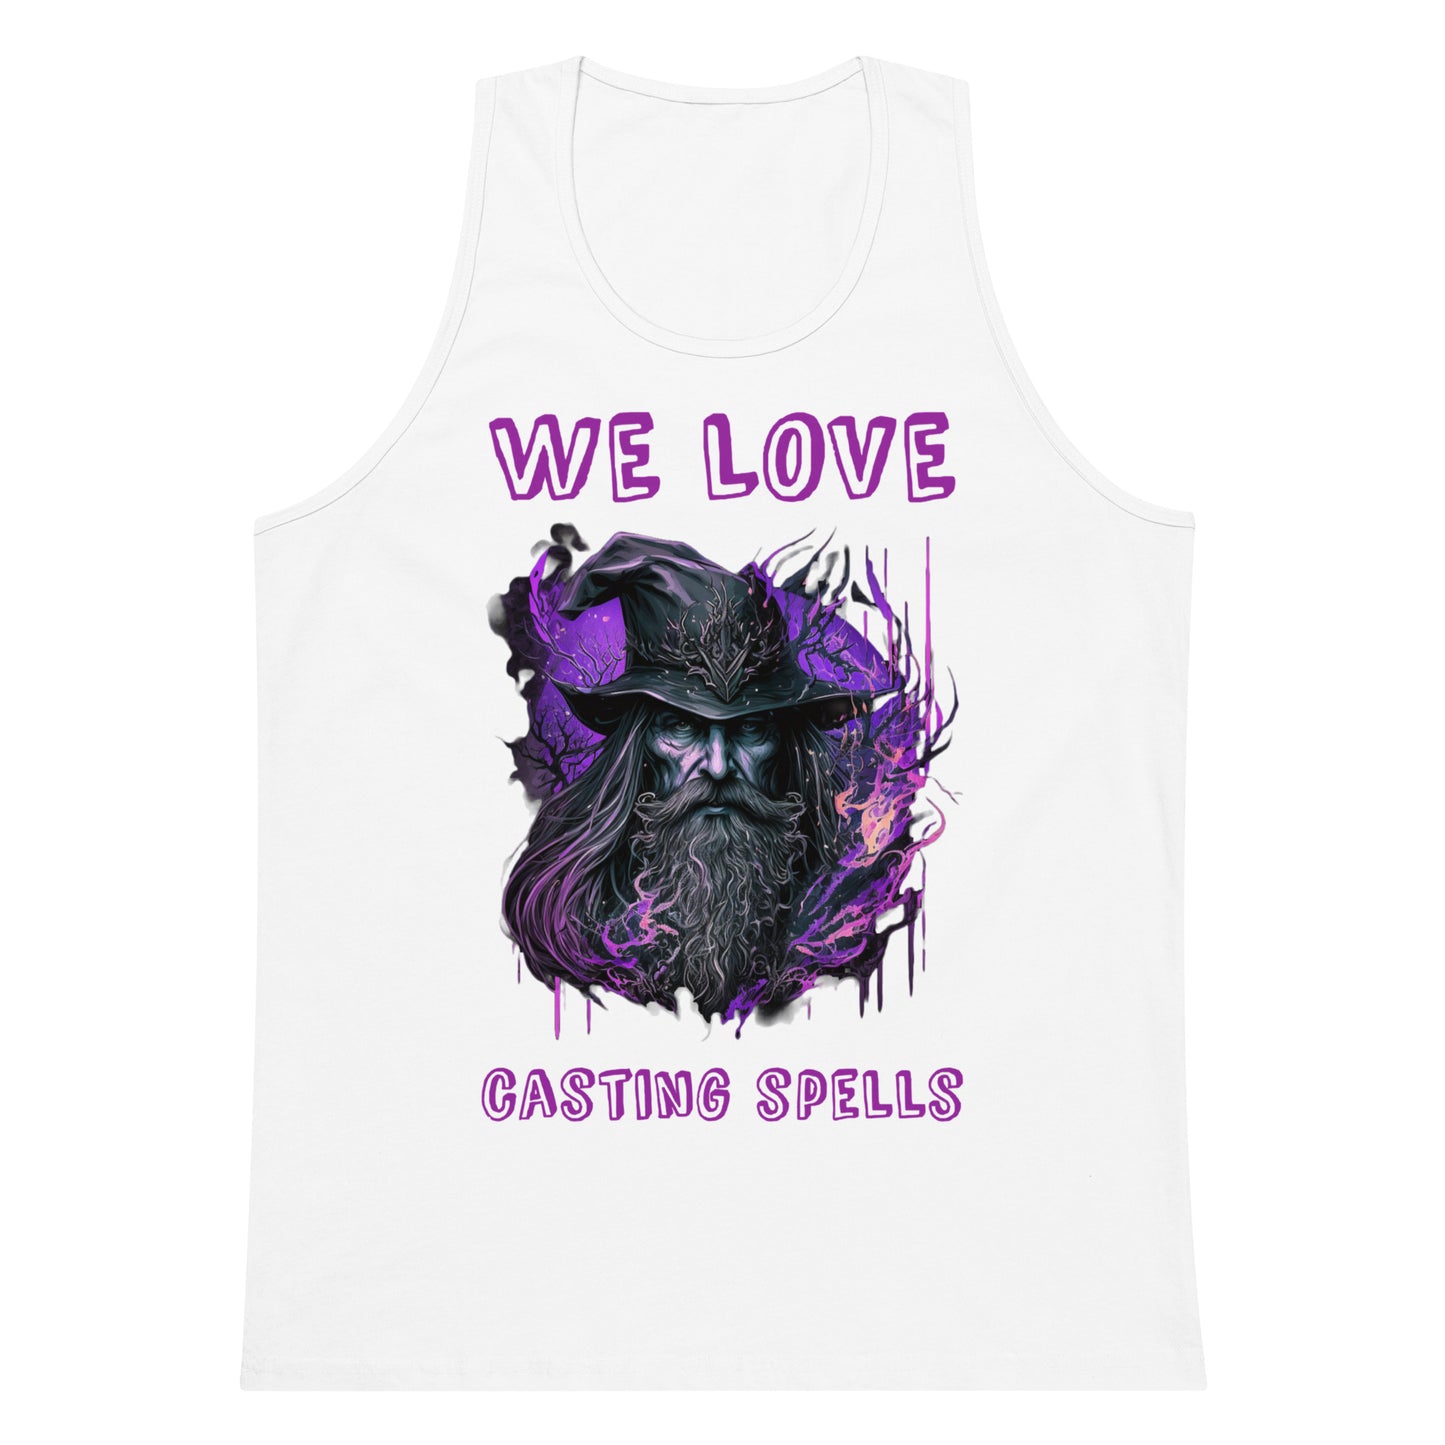 We love casting spells (tank top)